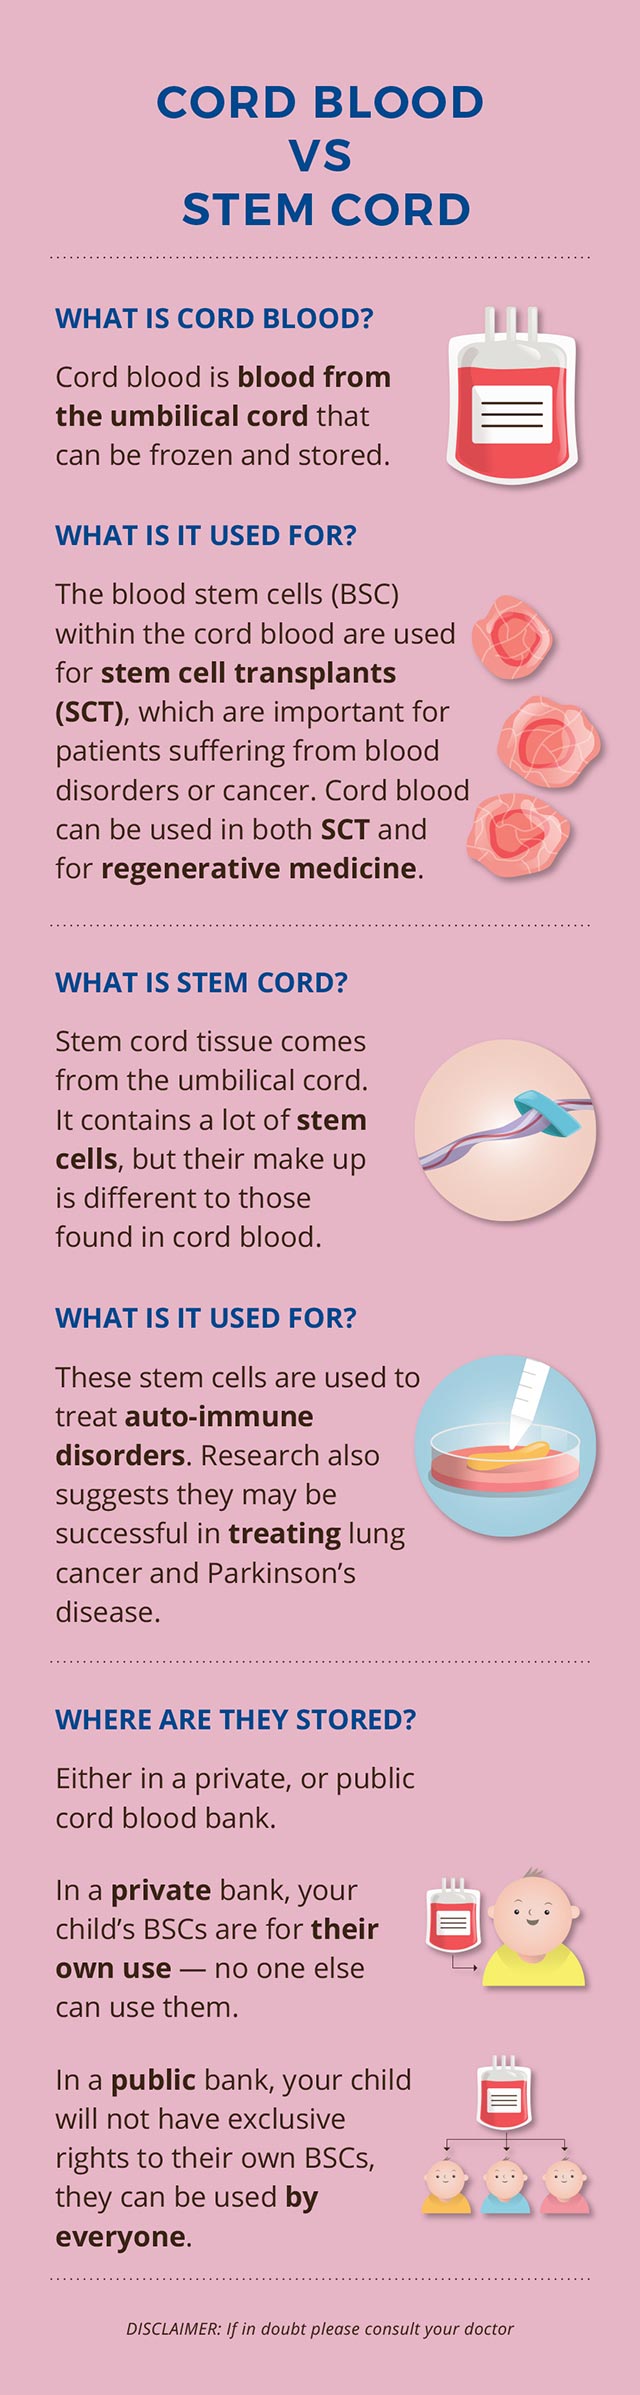 Cord blood versus stem cord